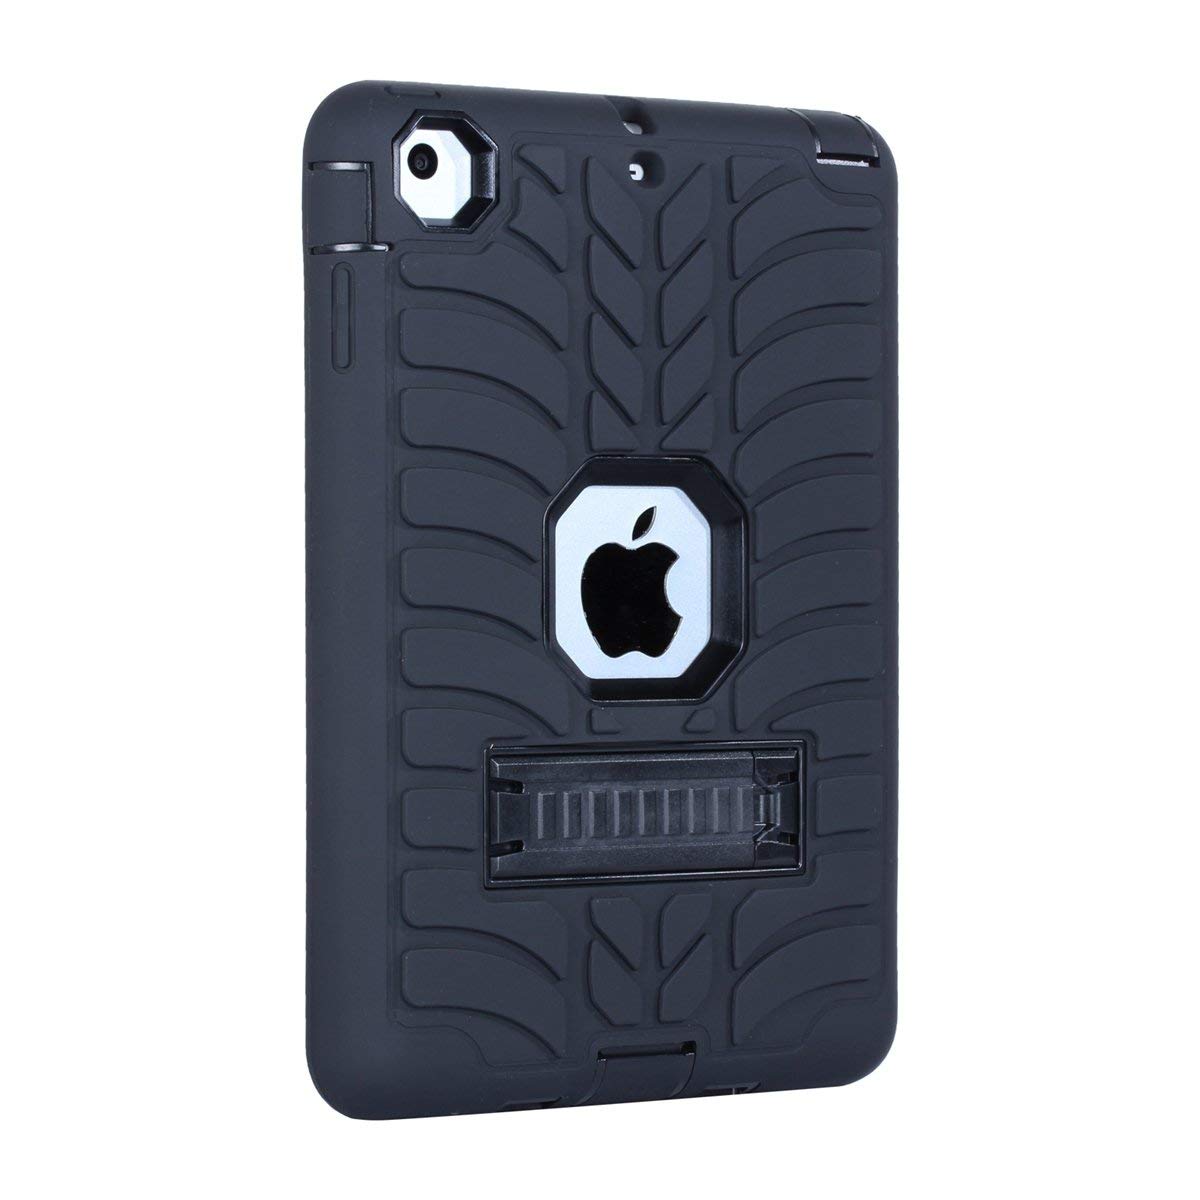 TOTOOSE iPad Mini 1 2 3 Phone Case Protective design Cell Case Backcover Tough Case Slim Light Case Cover for iPad Mini 1 2 3 (Black)